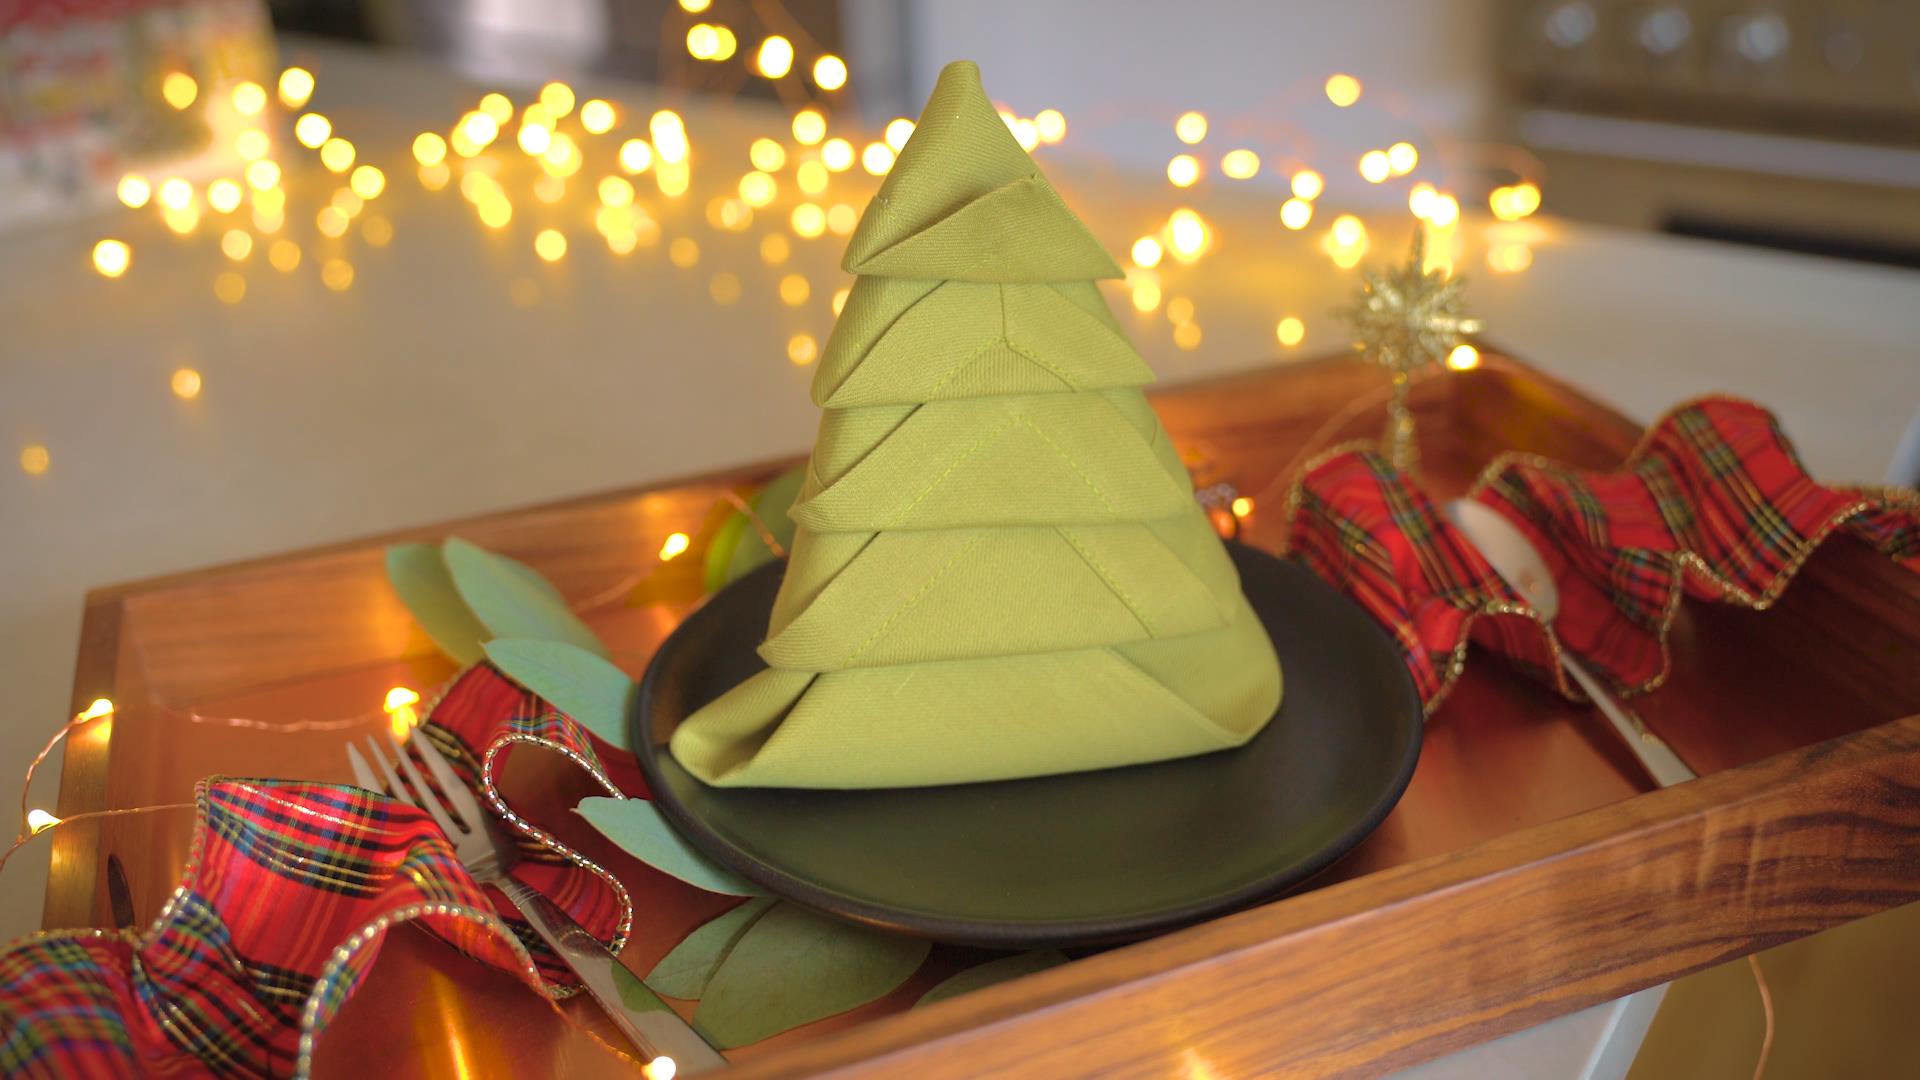 How to fold napkins into adorable Christmas trees